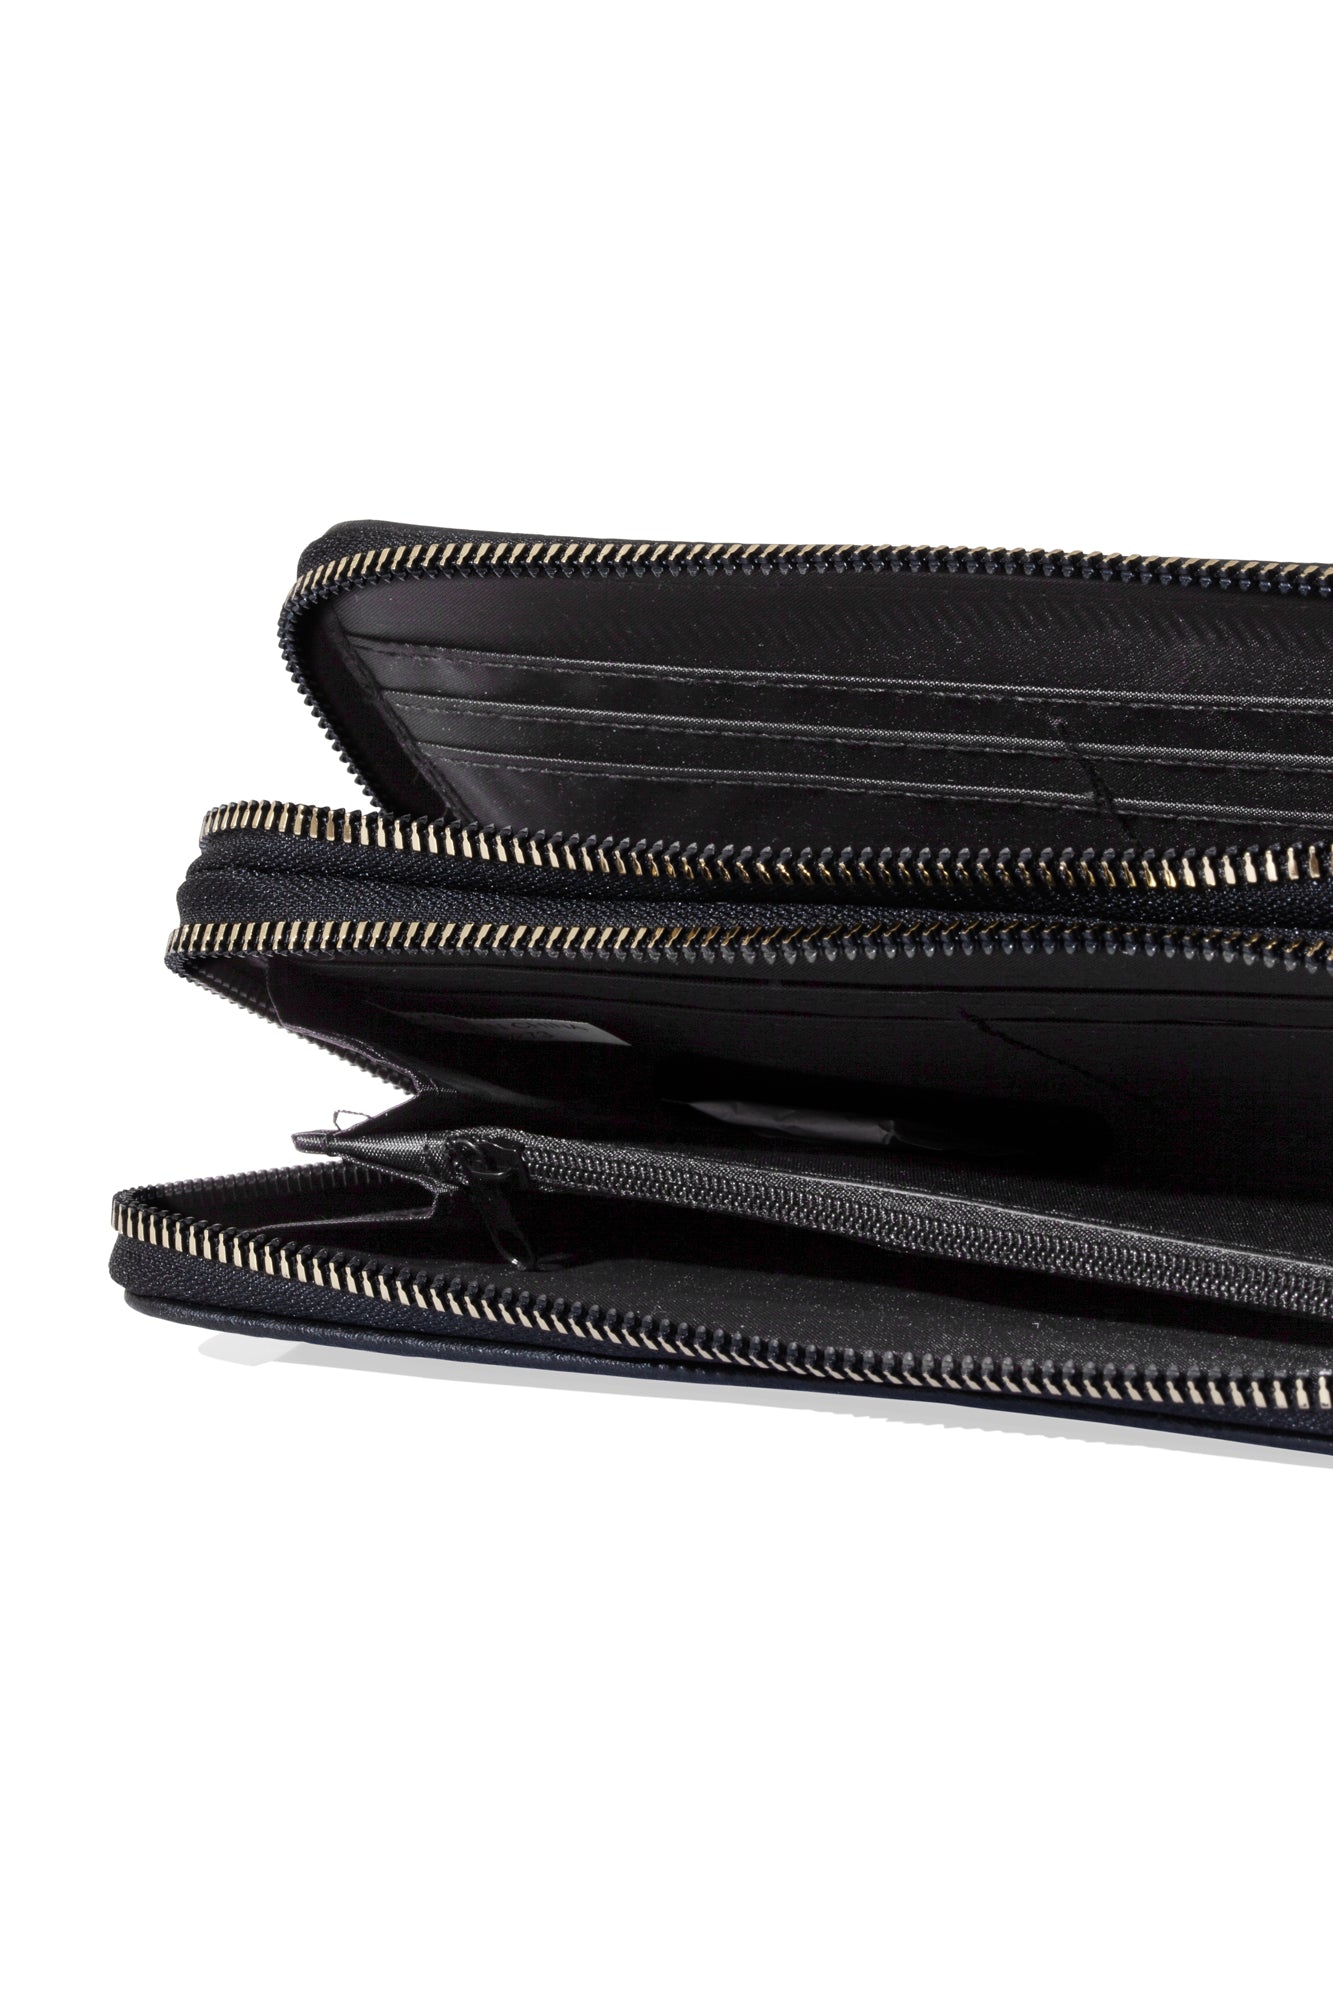 Elegant Black Long Zipper Wallet - Bajio Black